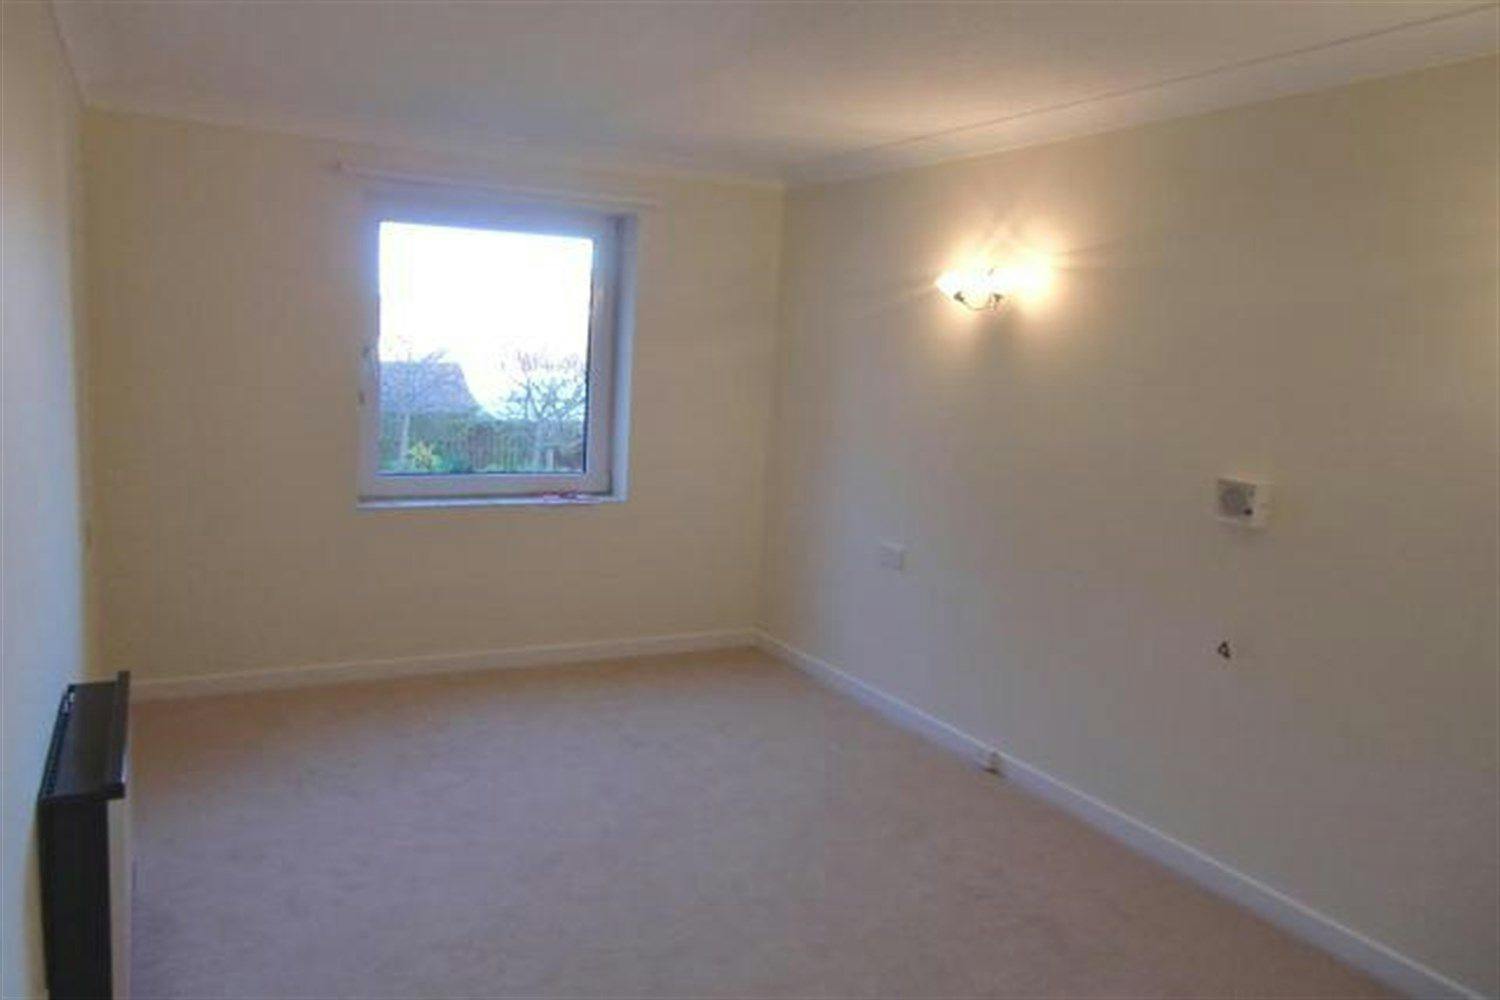 Bedroom at Homelinks House Retirement Development in Lytham St Anne's, Lancashire